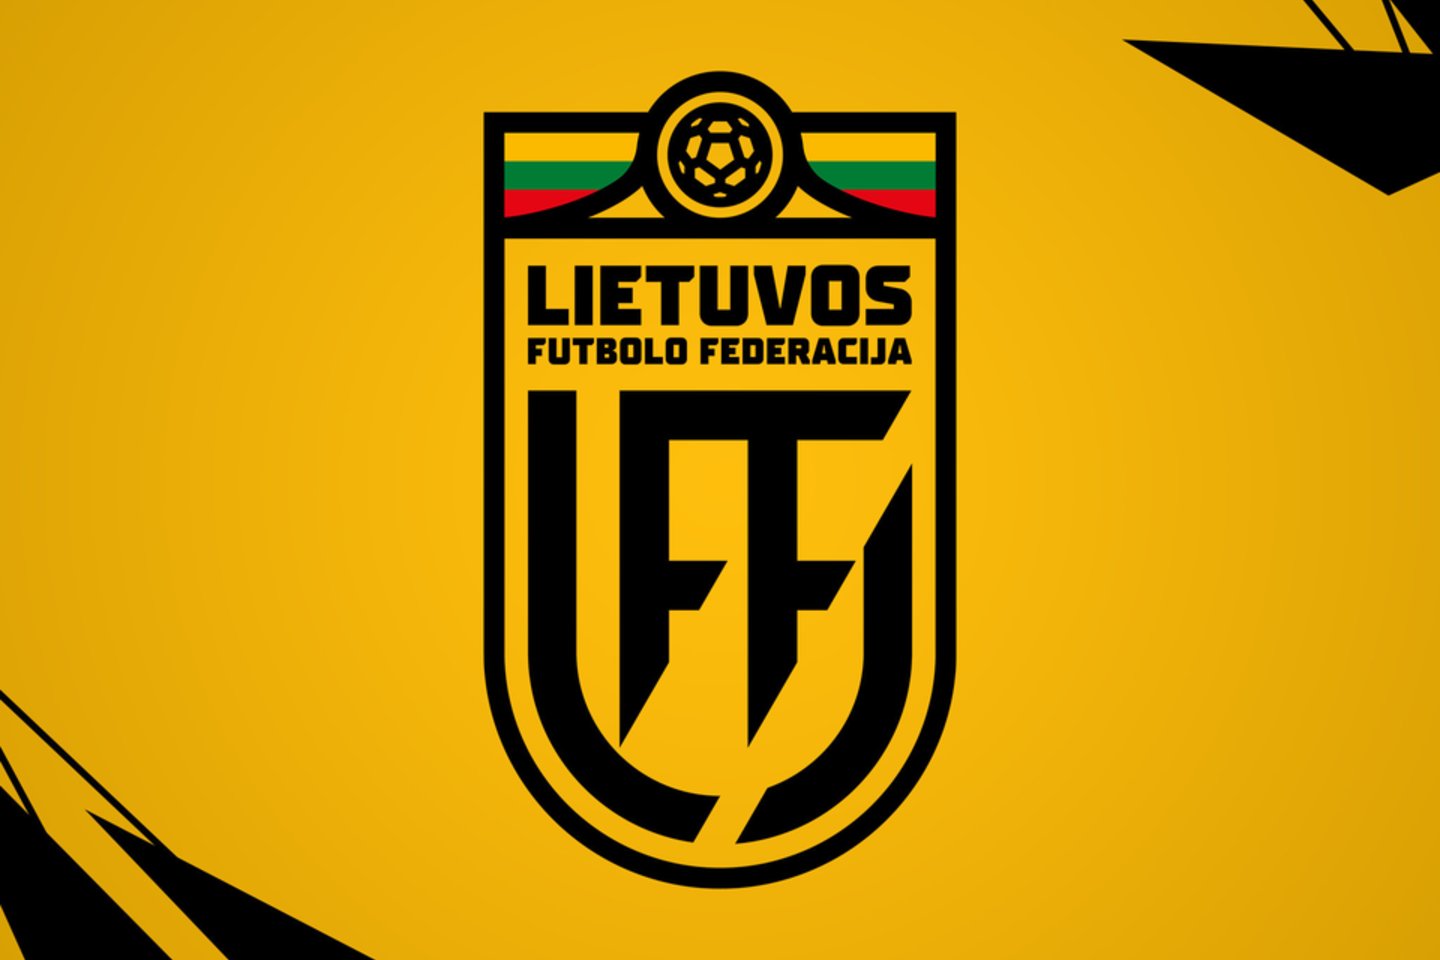  Naujasis LFF logotipas